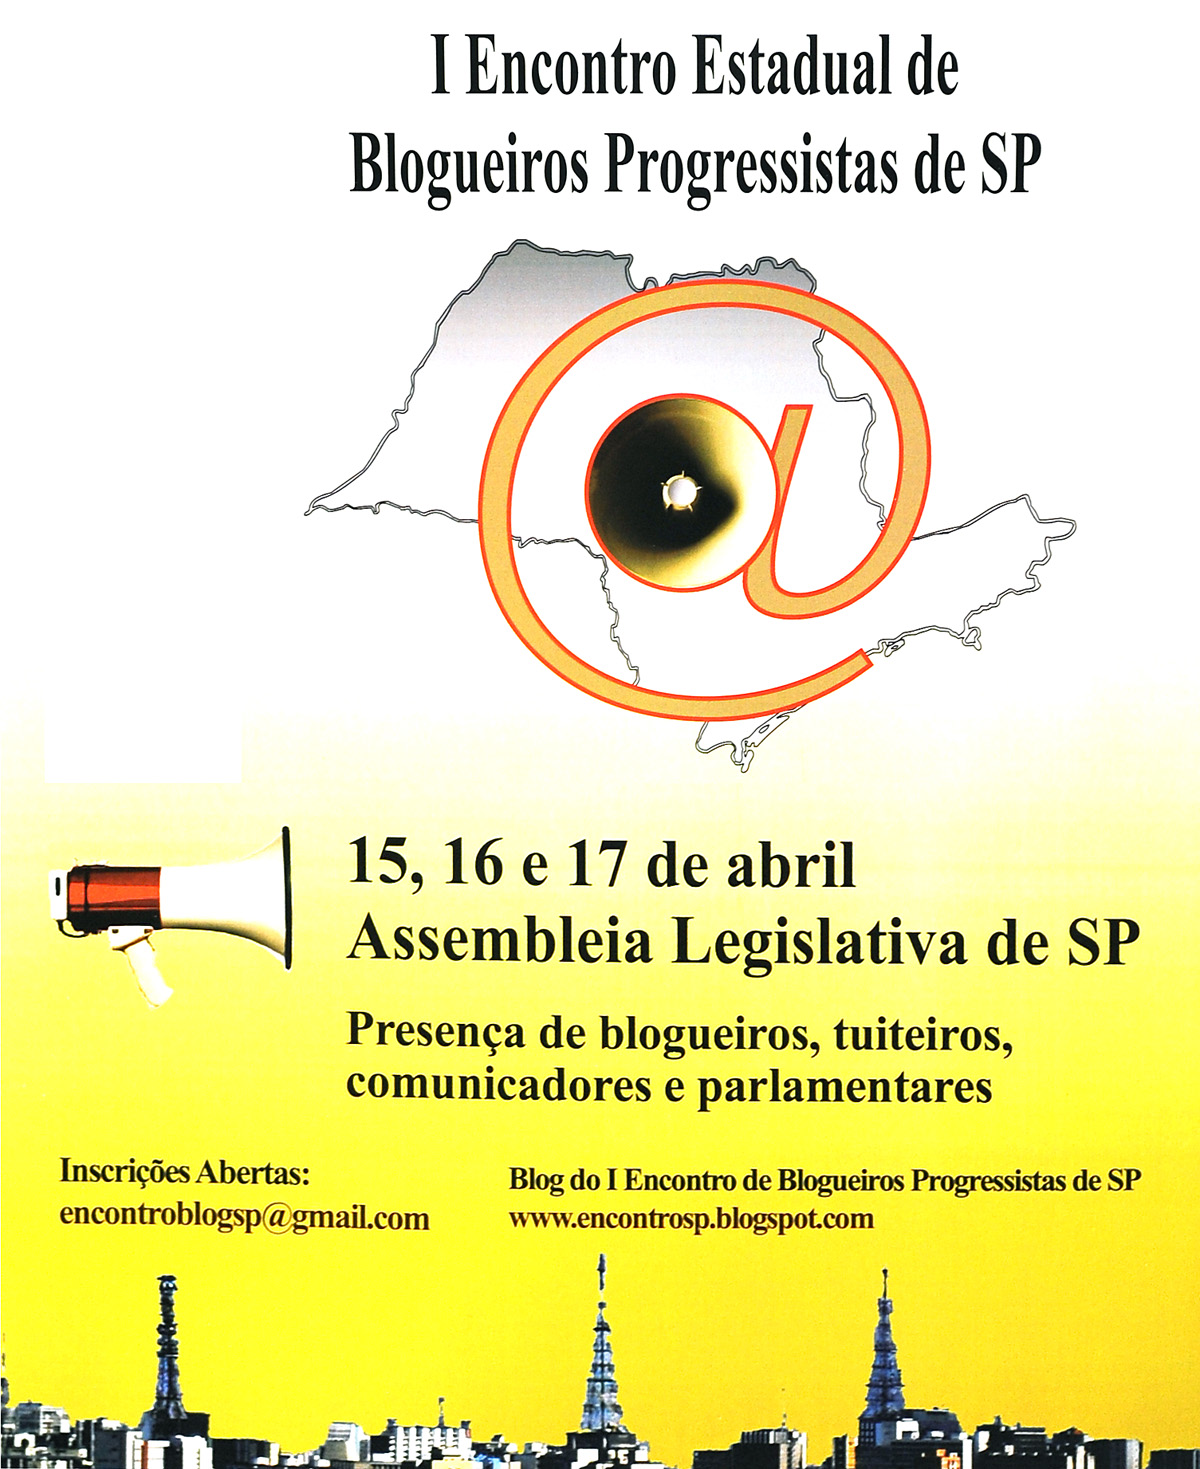  <a style='float:right;color:#ccc' href='https://www3.al.sp.gov.br/repositorio/noticia/04-2011/MMY_3984.jpg' target=_blank><i class='bi bi-zoom-in'></i> Clique para ver a imagem </a>